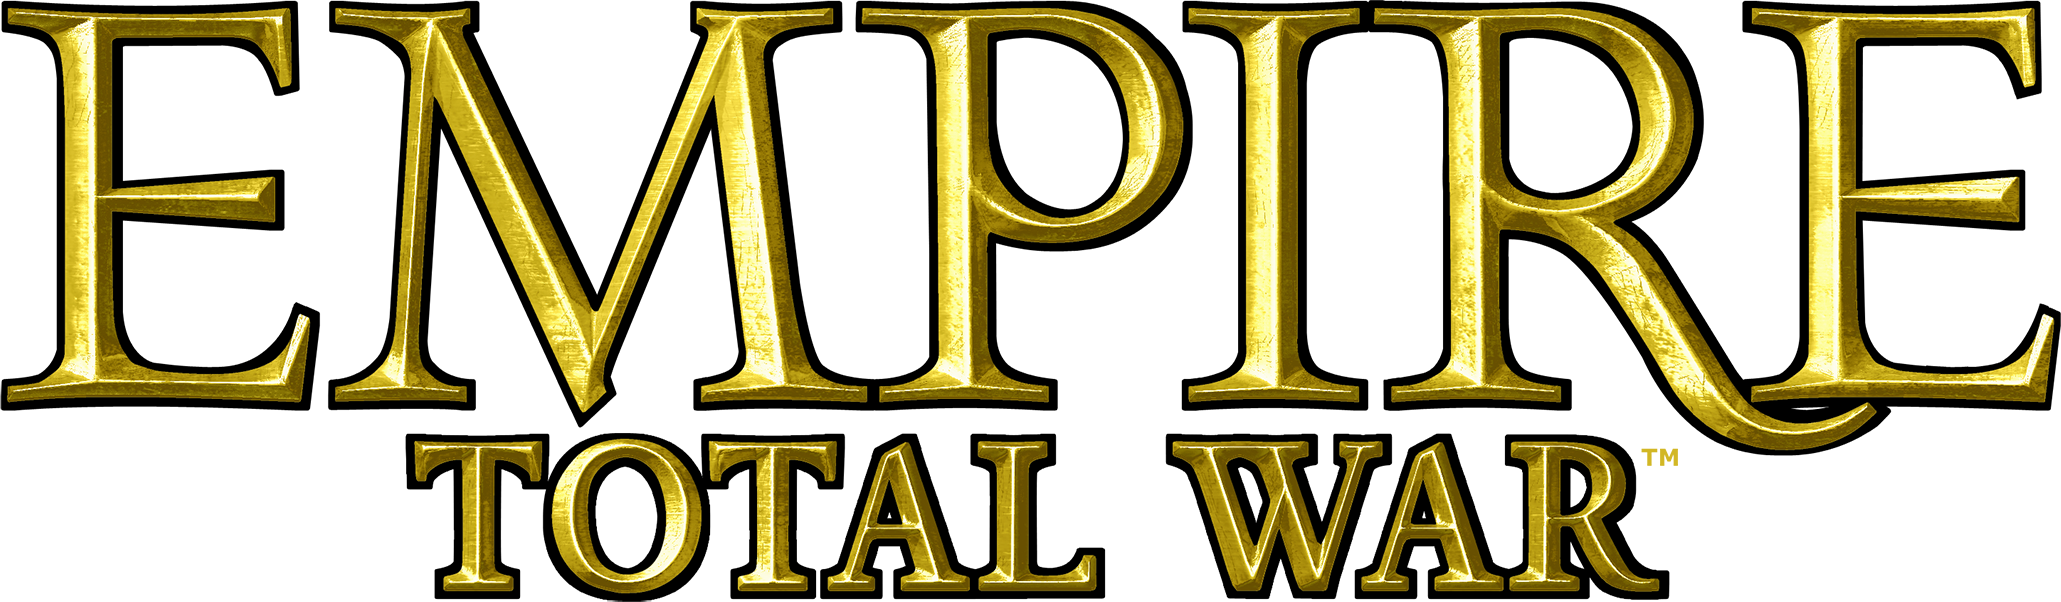 Total War Logo PNG Clipart Background